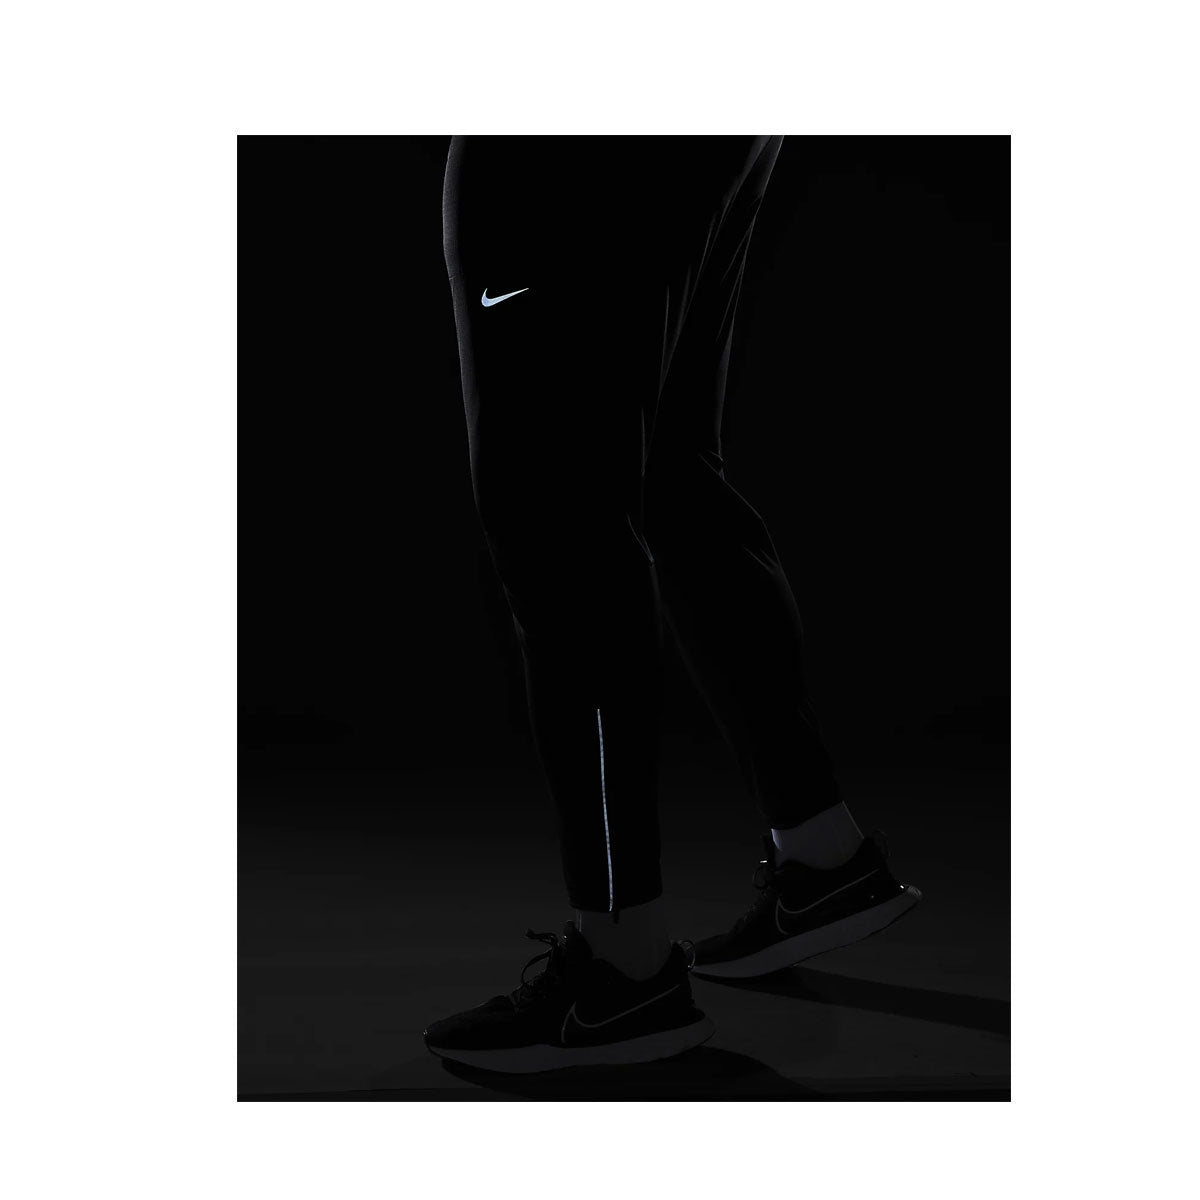 Nike Men's Dri-FIT Phenom Elite Knit Running Trousers - KickzStore